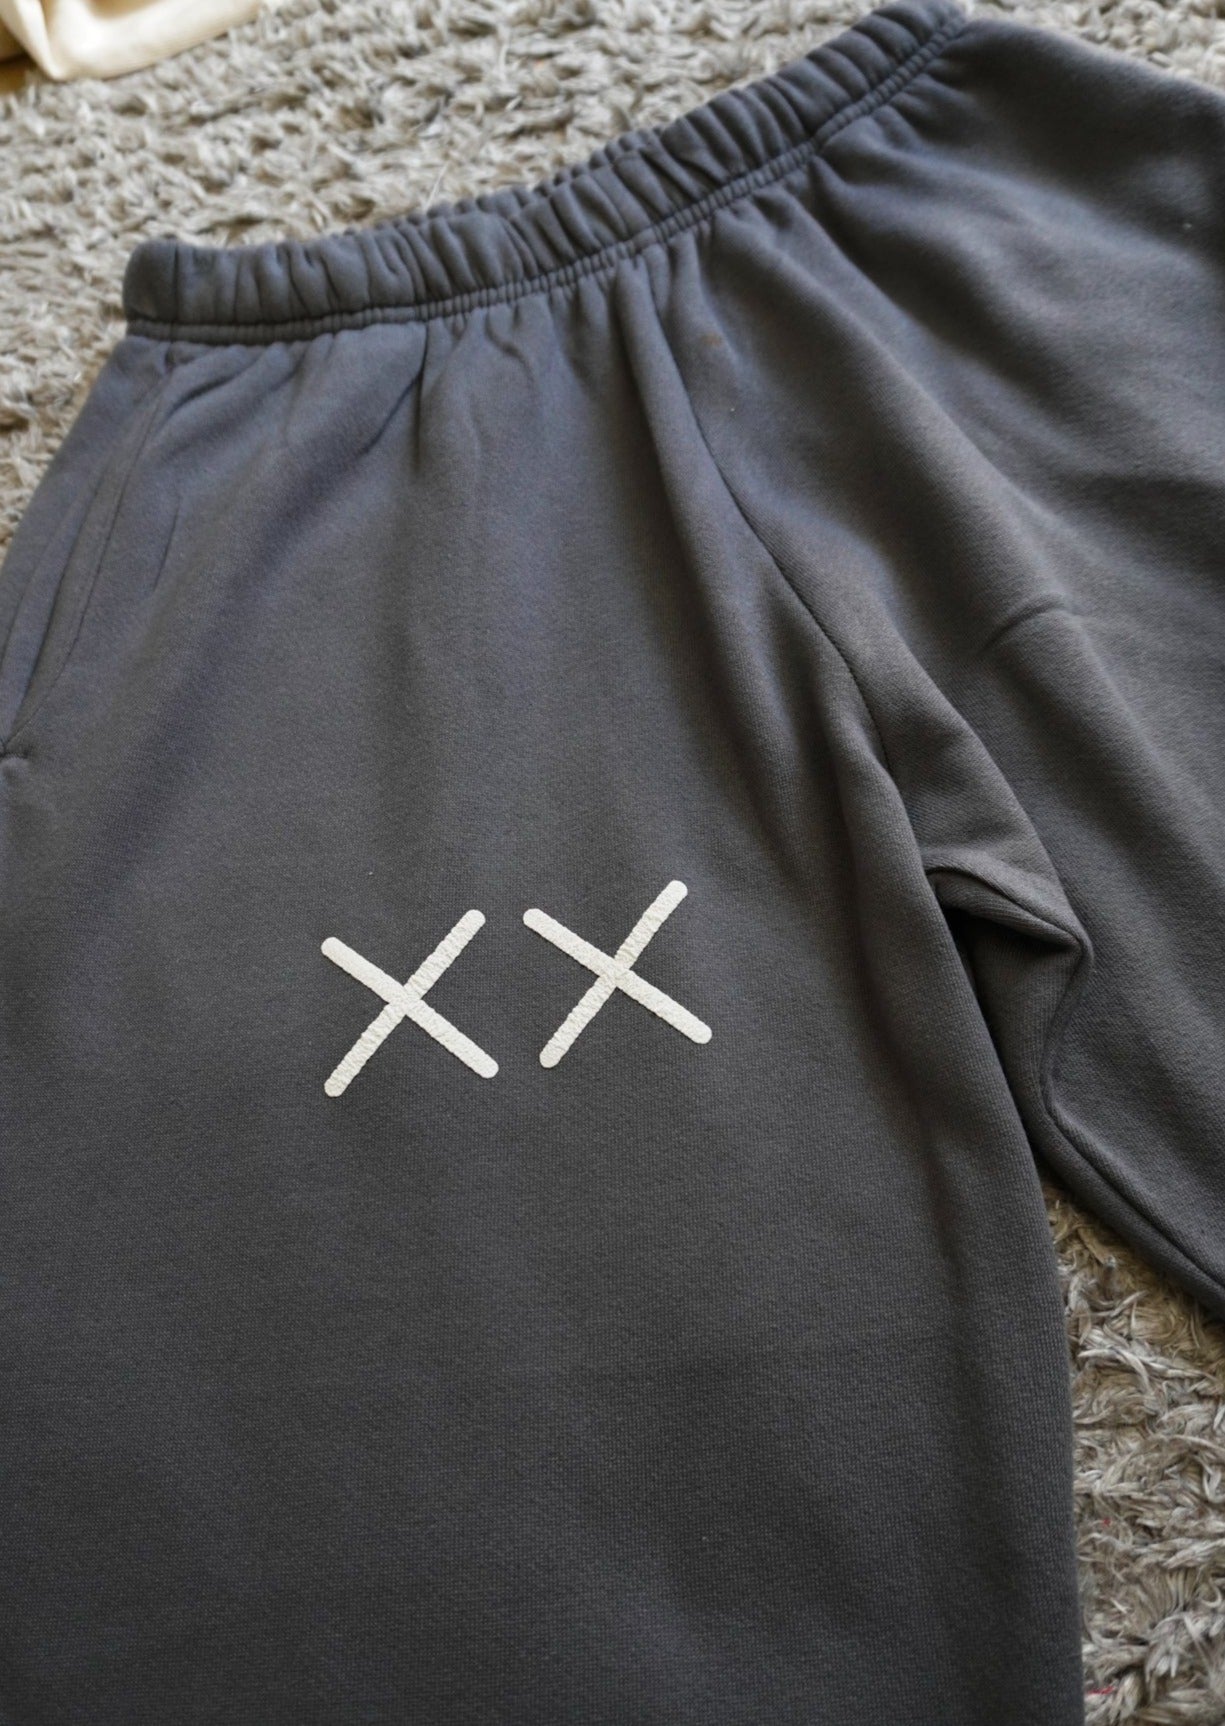 Double XX Printed Sweatpants